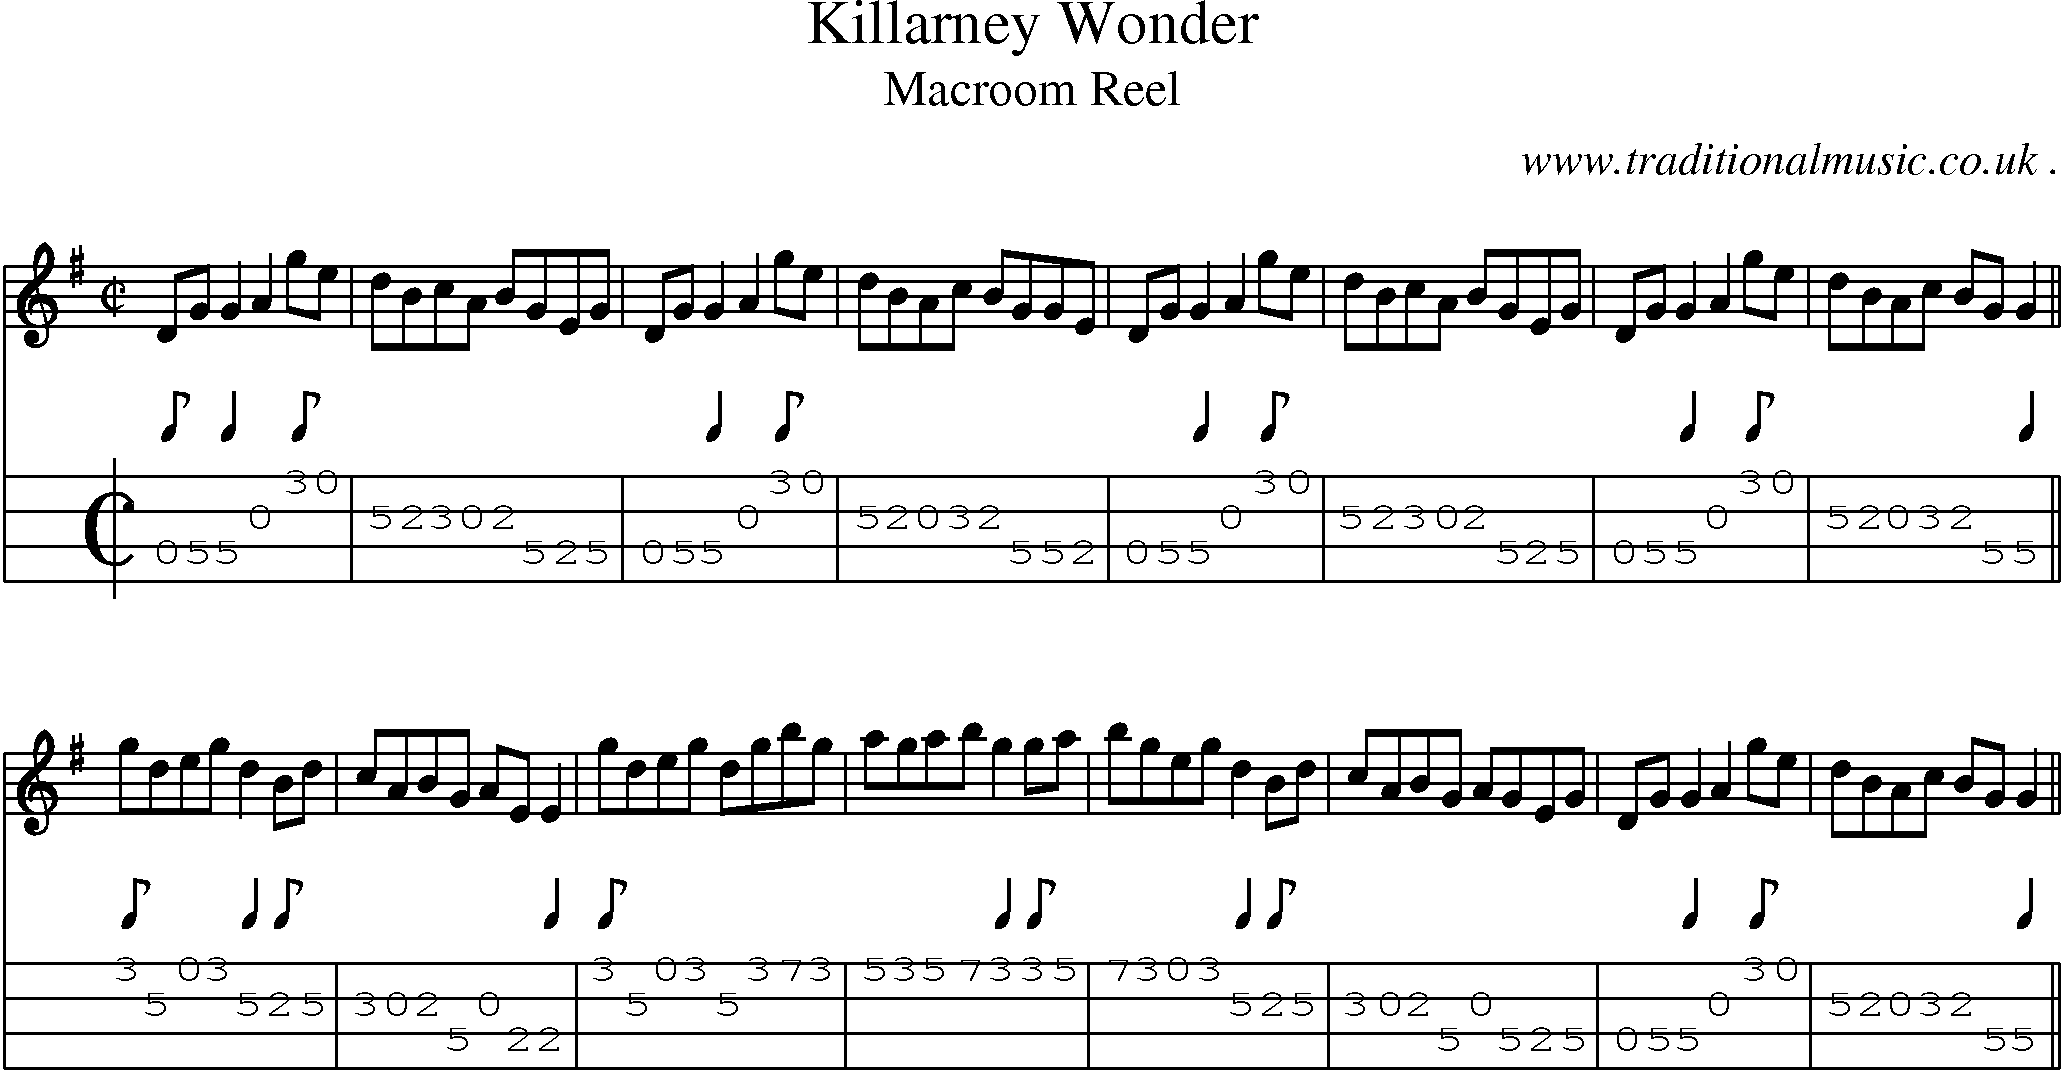 Sheet-Music and Mandolin Tabs for Killarney Wonder